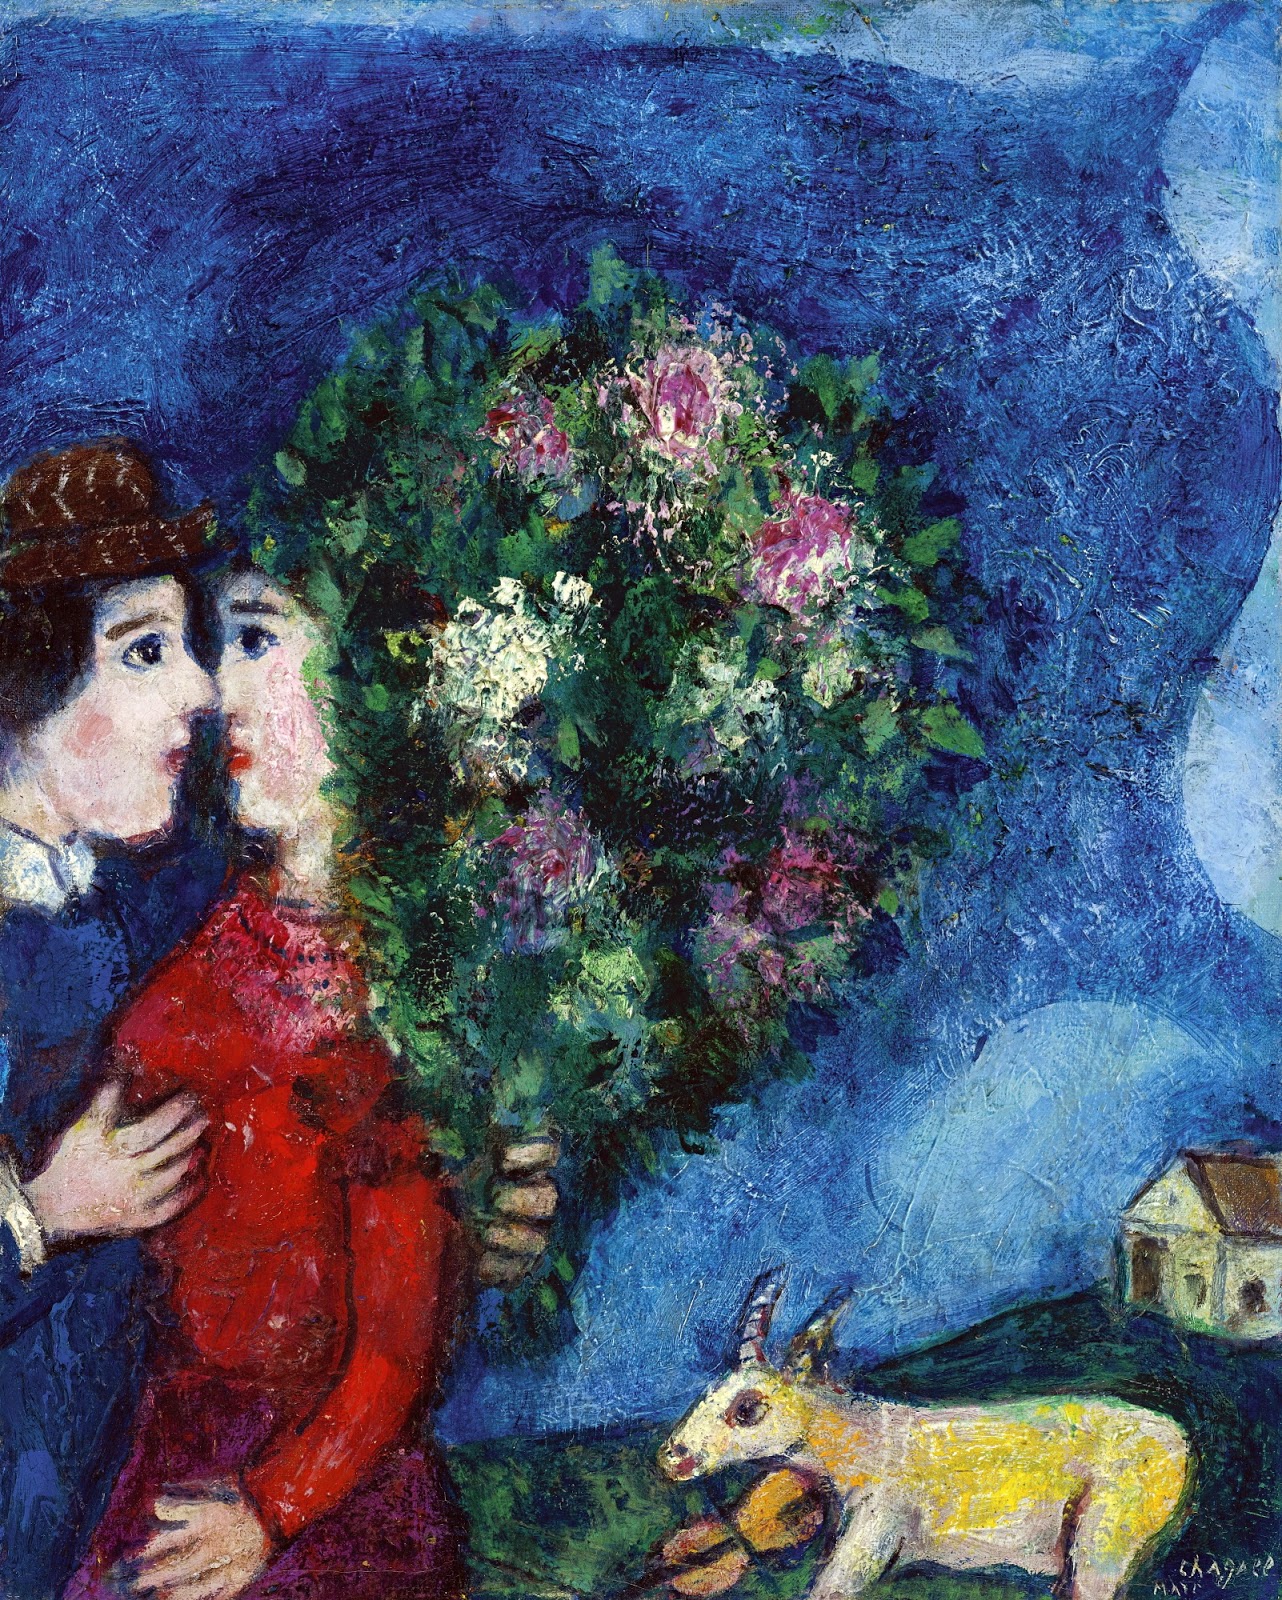 Marc+Chagall-1887-1985 (265).jpg